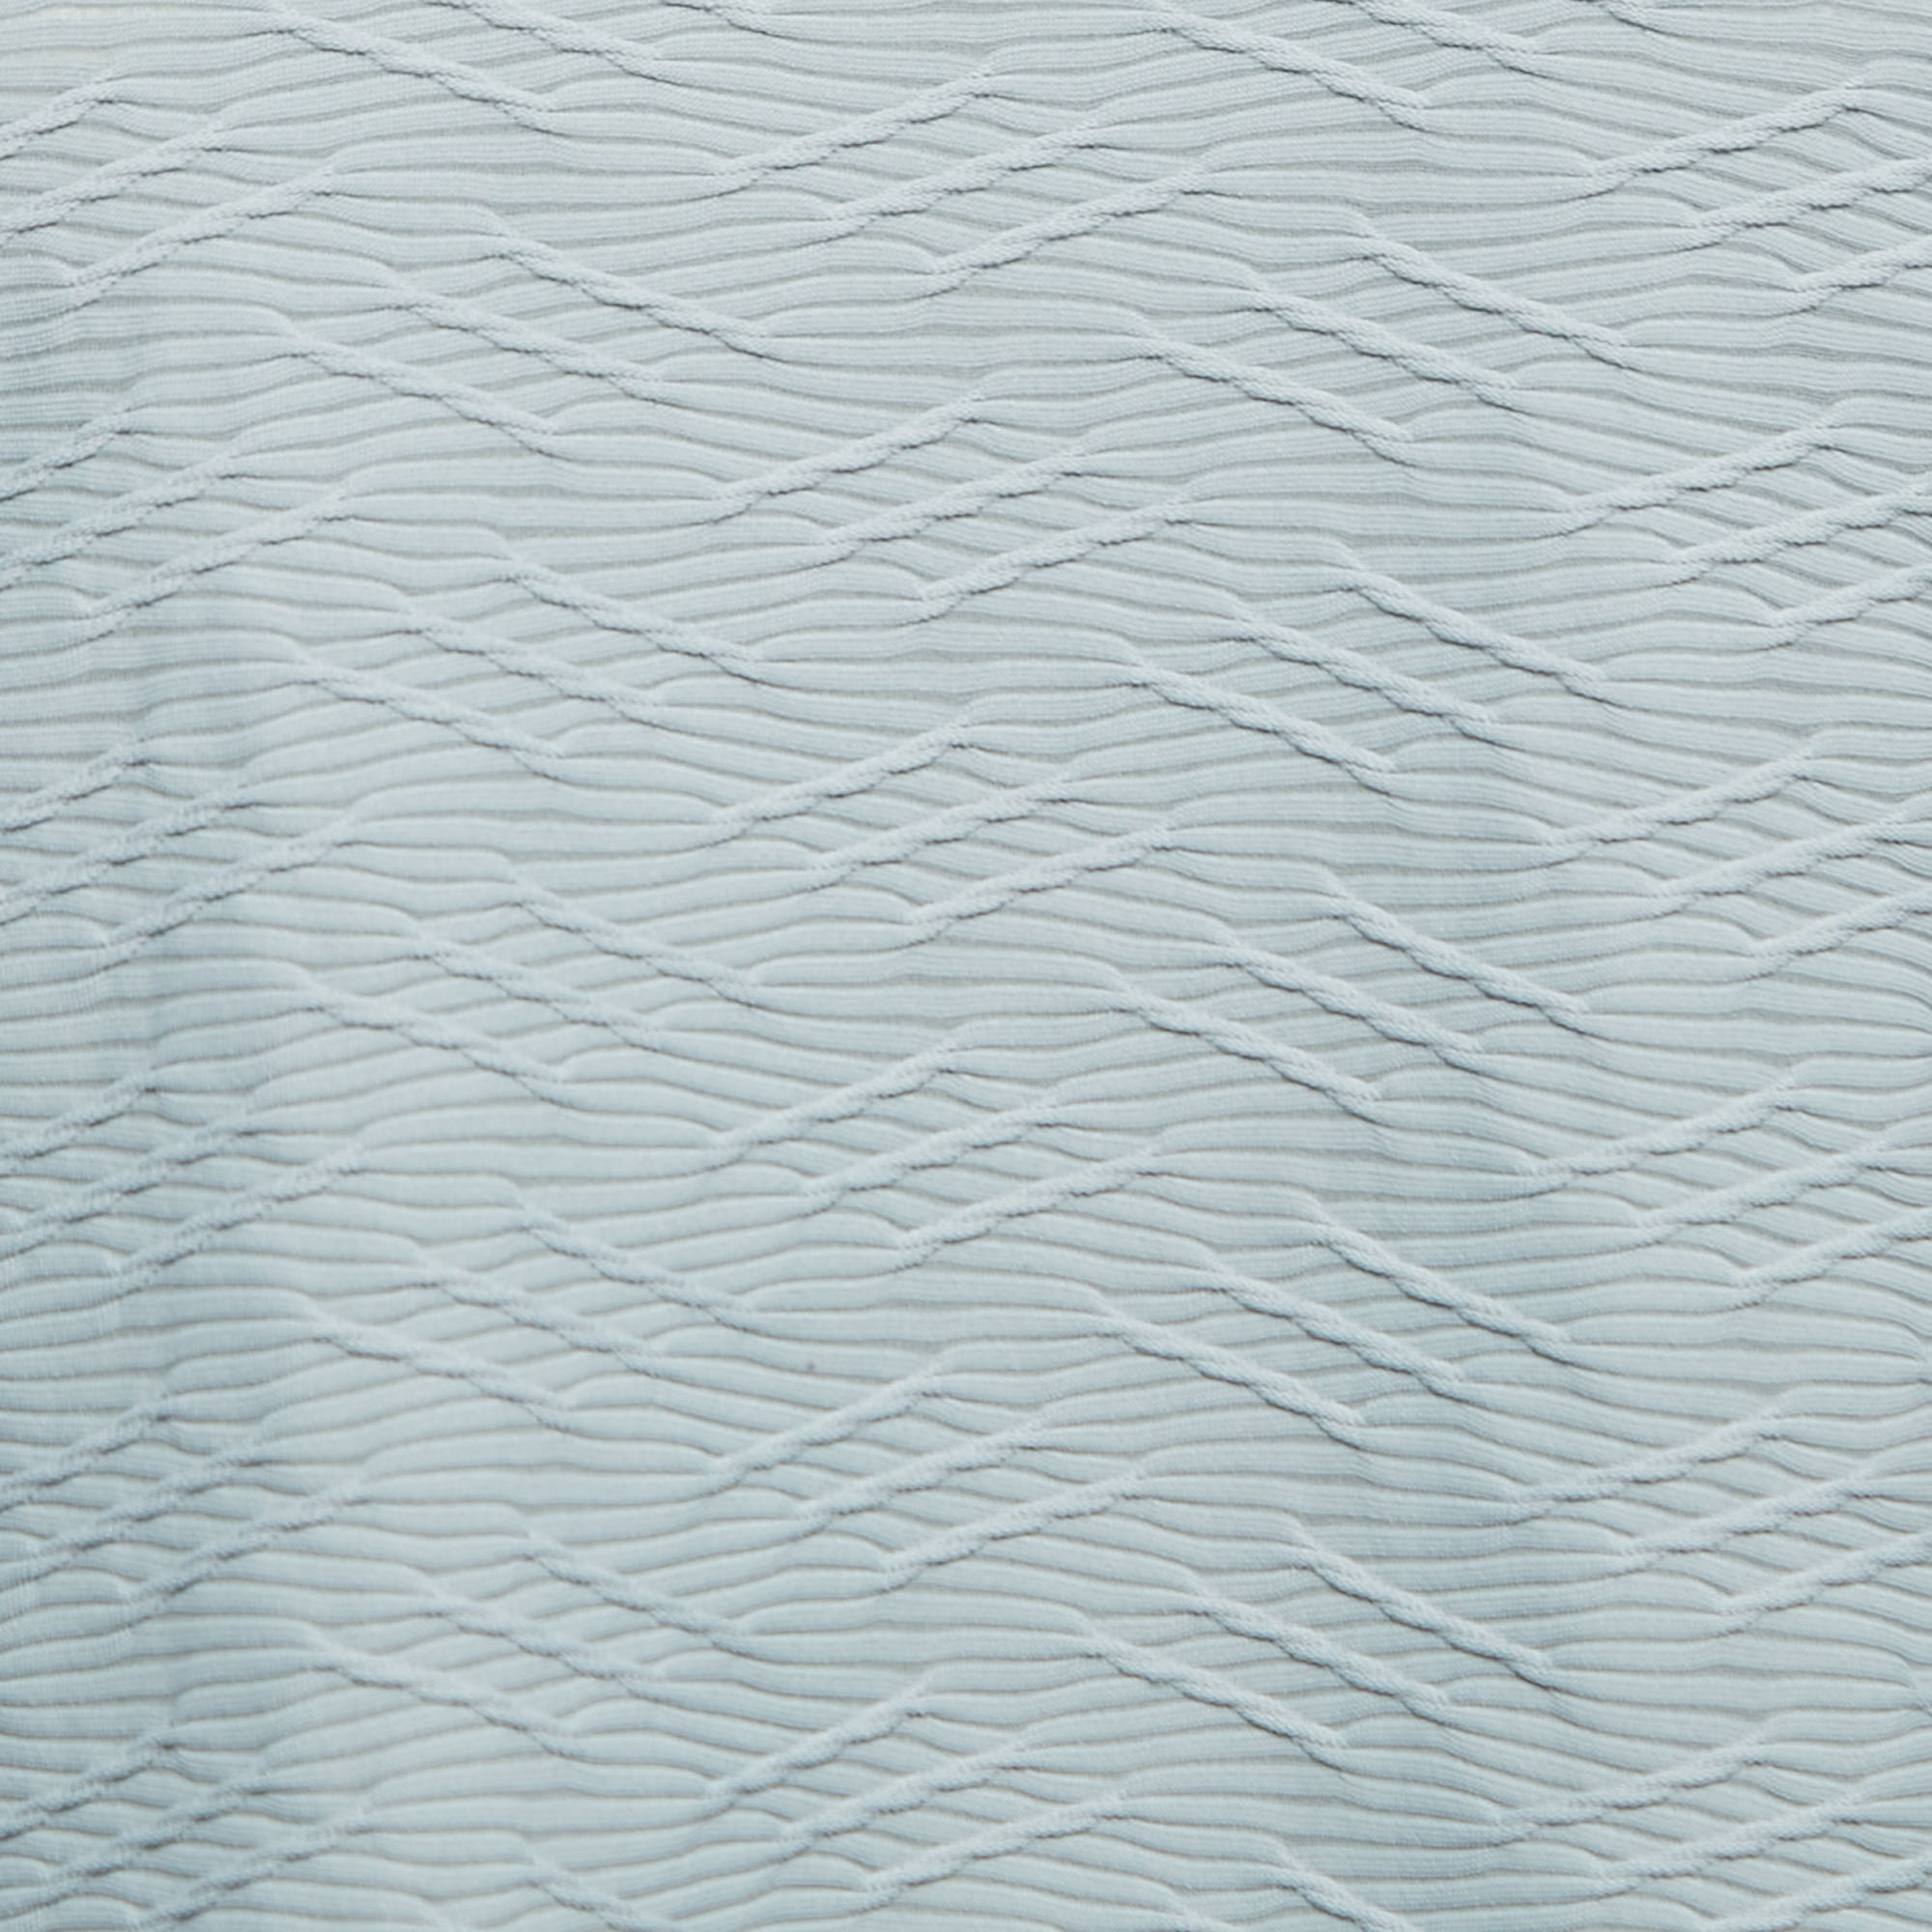 Giorgio Armani Grey Textured Knit Long Sleeve Top M